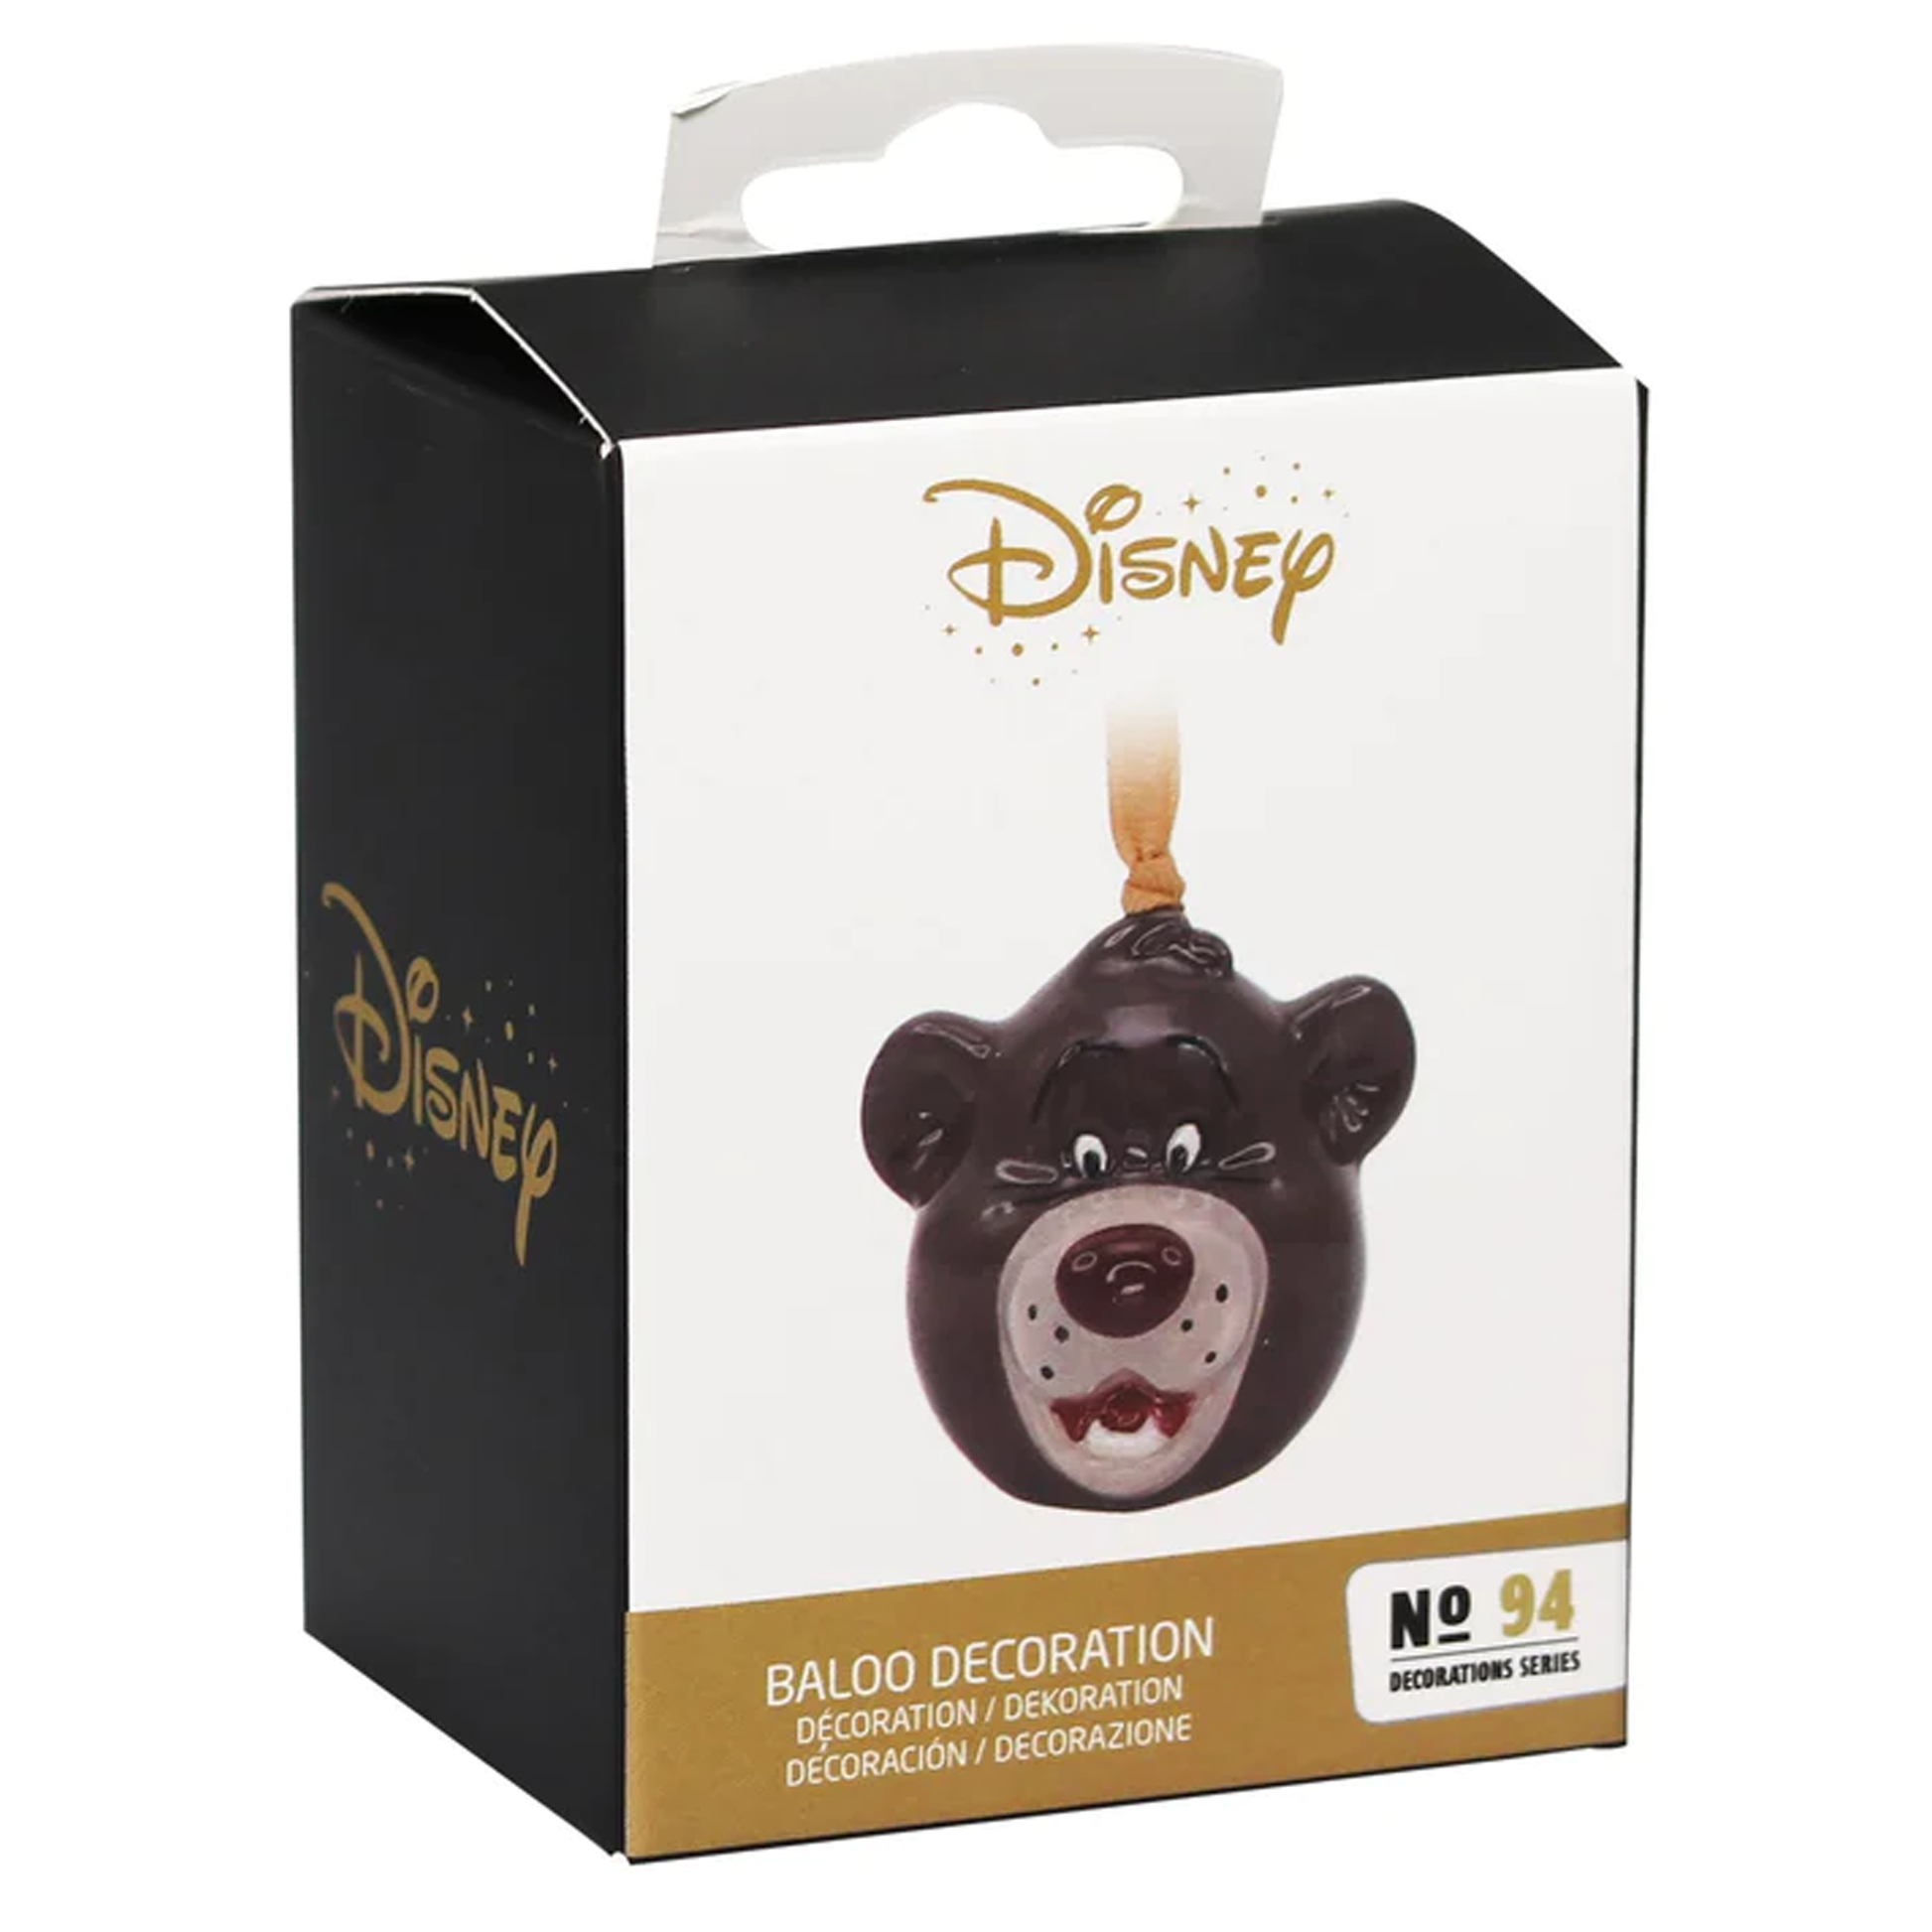 Jungle Book Baloo the Bear Bauble Hanging Decoration in Box | Happy Piranha